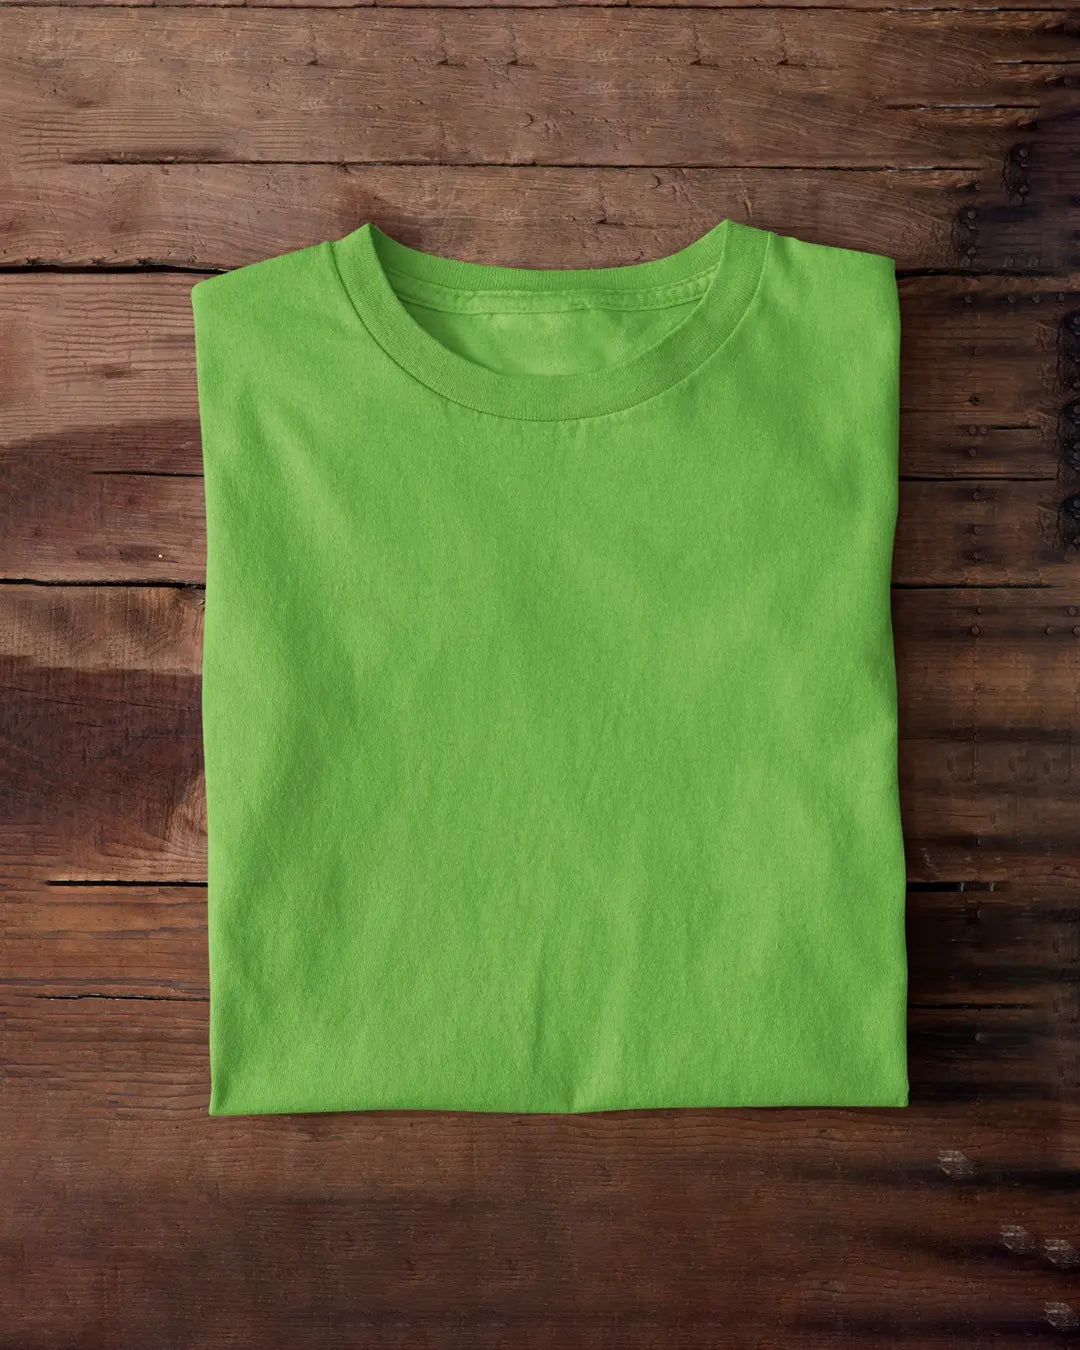 Matcha Plain Solid Cotton T-Shirt